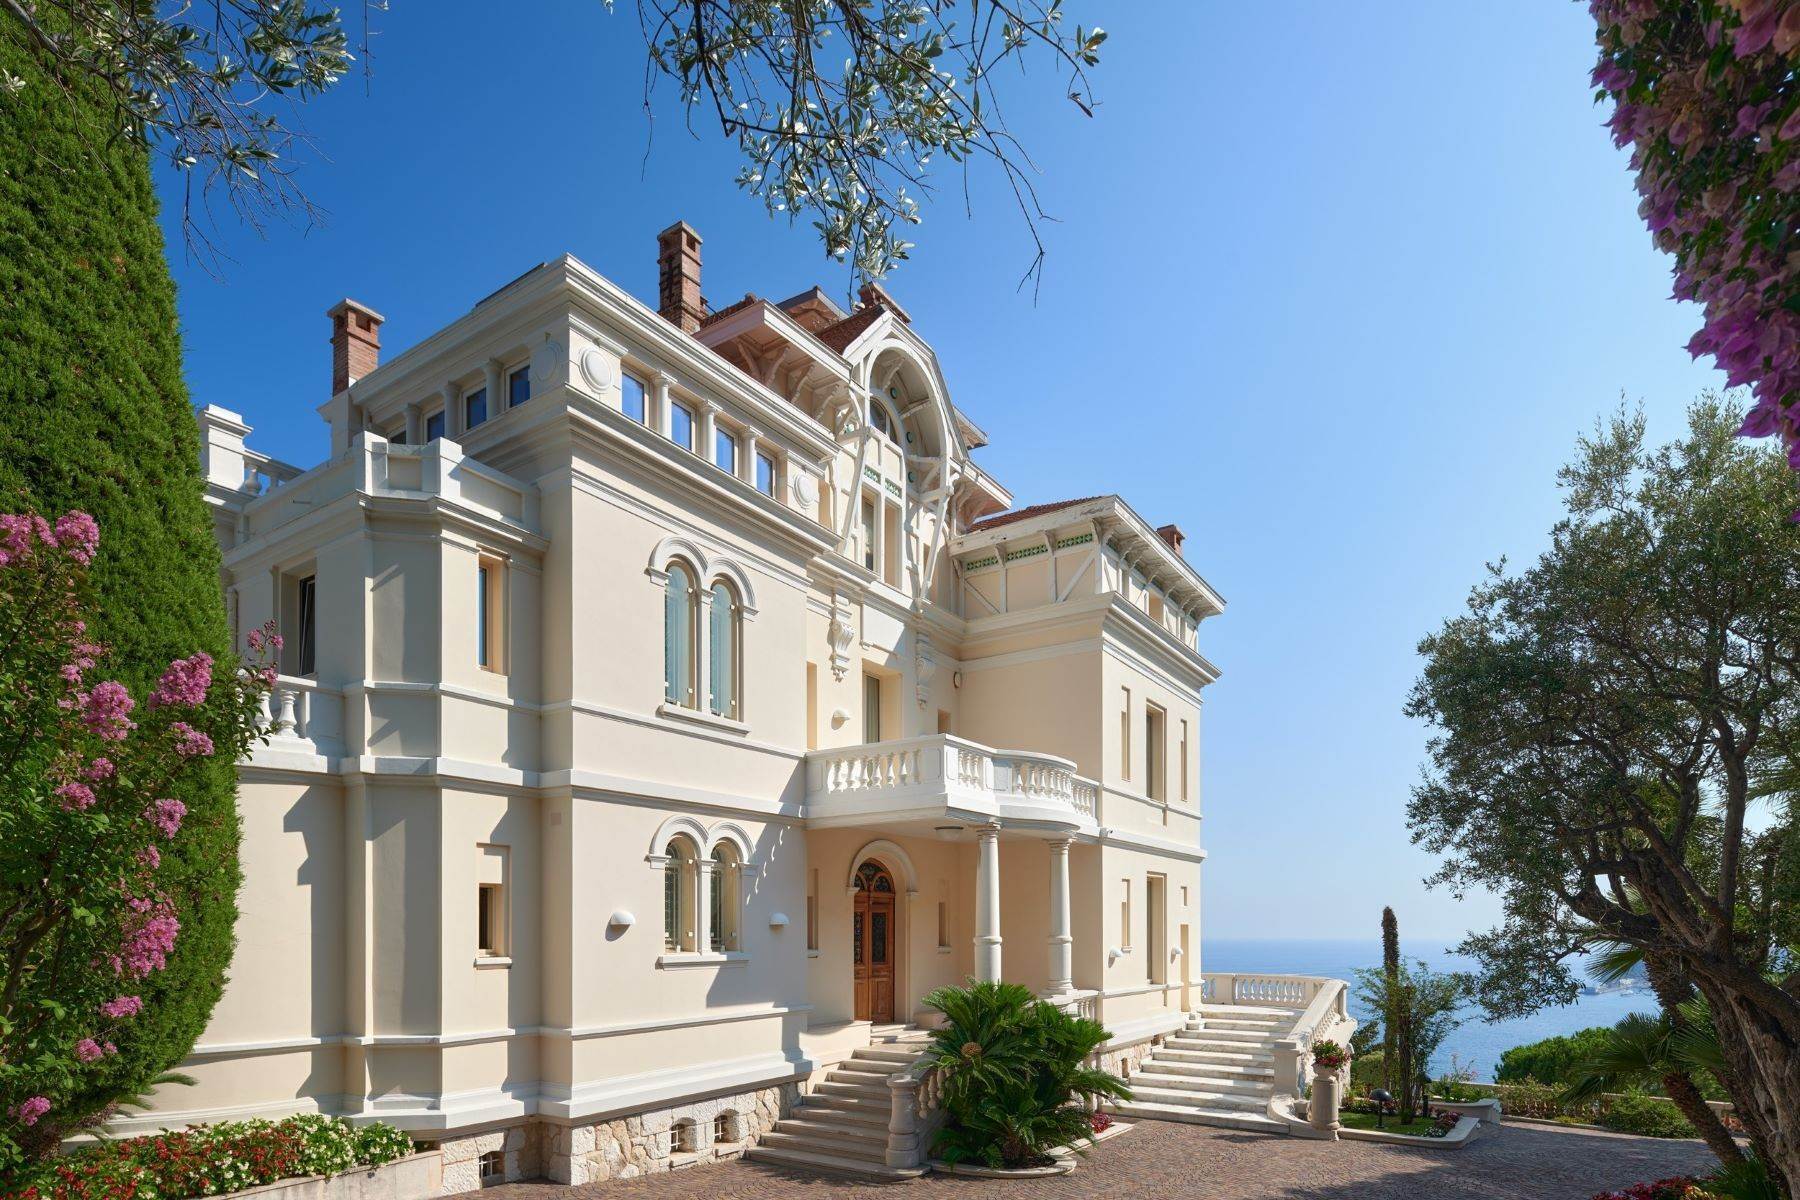 Property for Sale at Manor house Roquebrune Cap Martin, Provence-Alpes-Cote D'Azur 06190 France